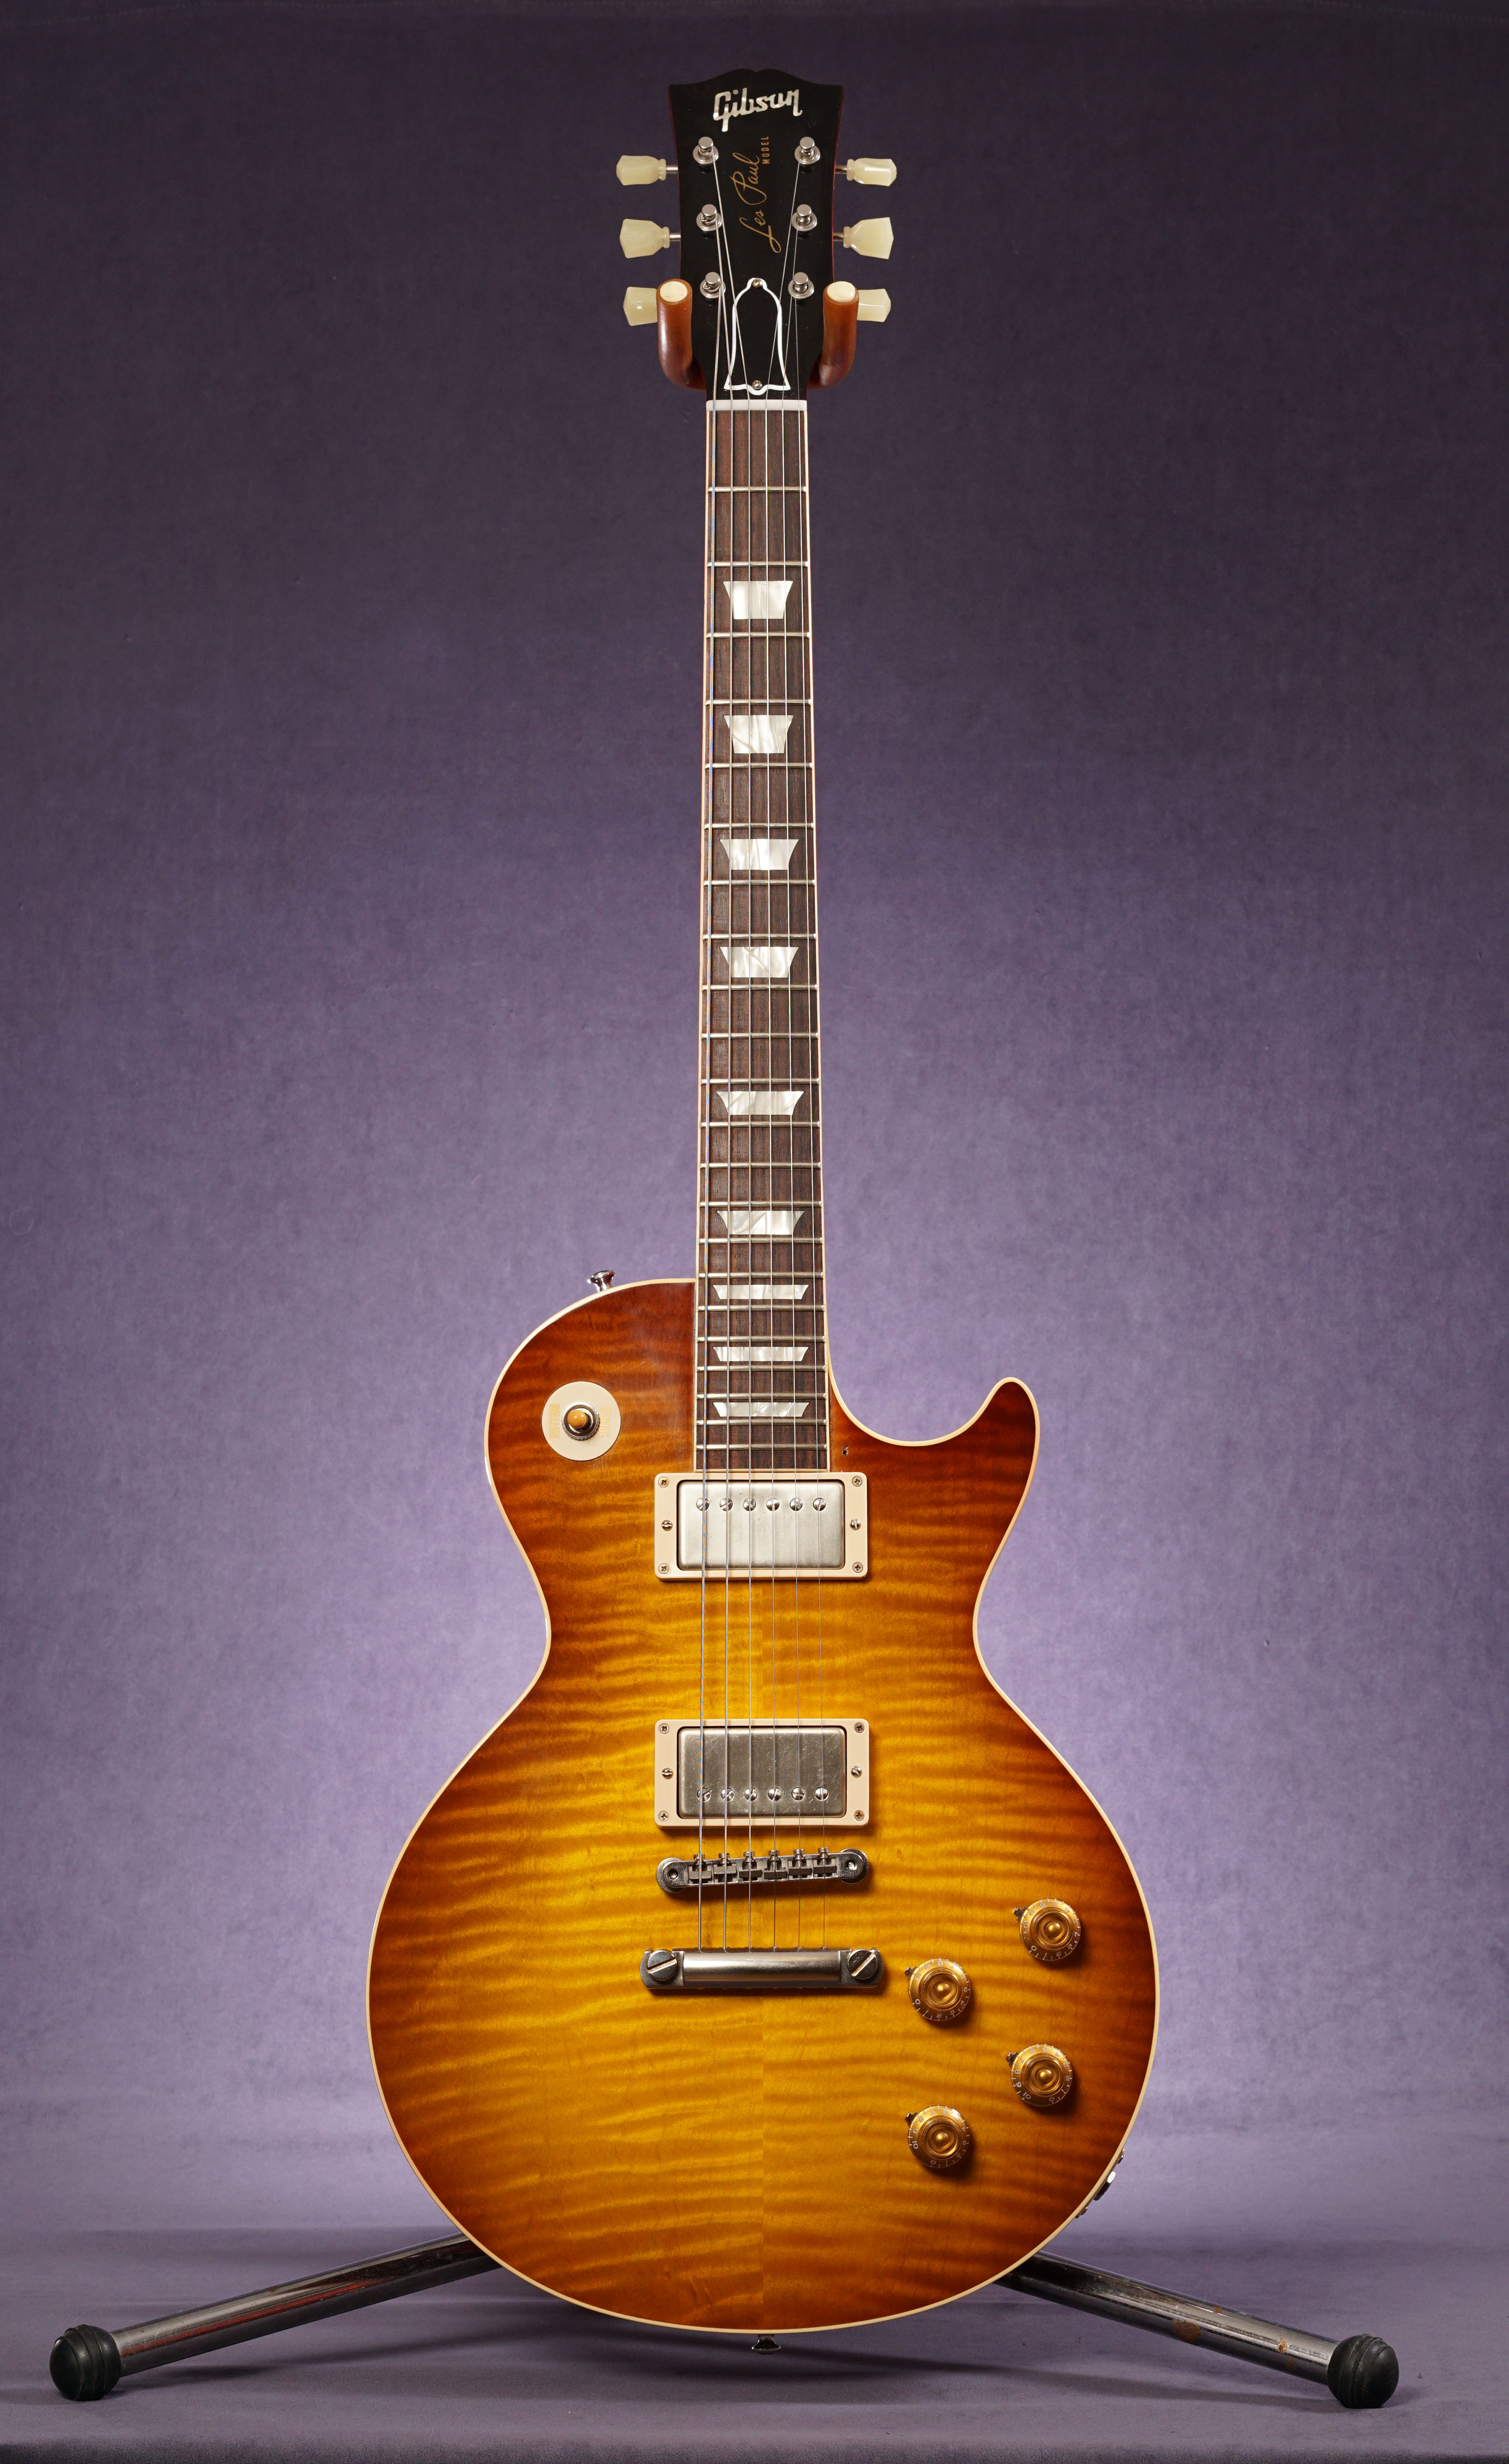 Gibson Les Paul - Wikipedia